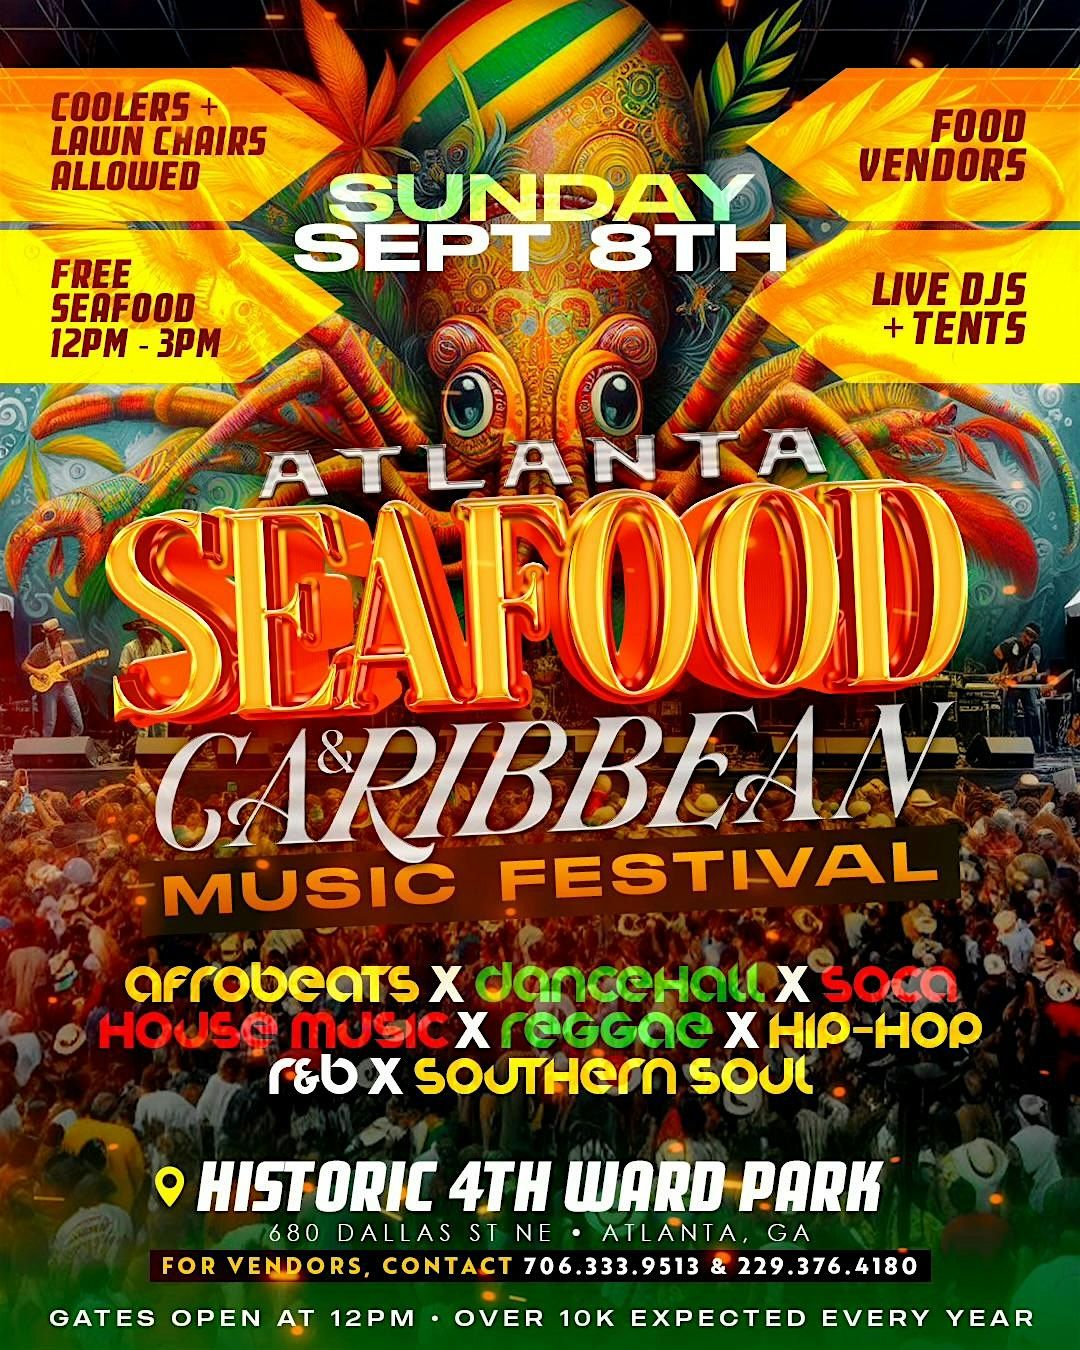 Atlanta Seafood & Caribbean Music Festival